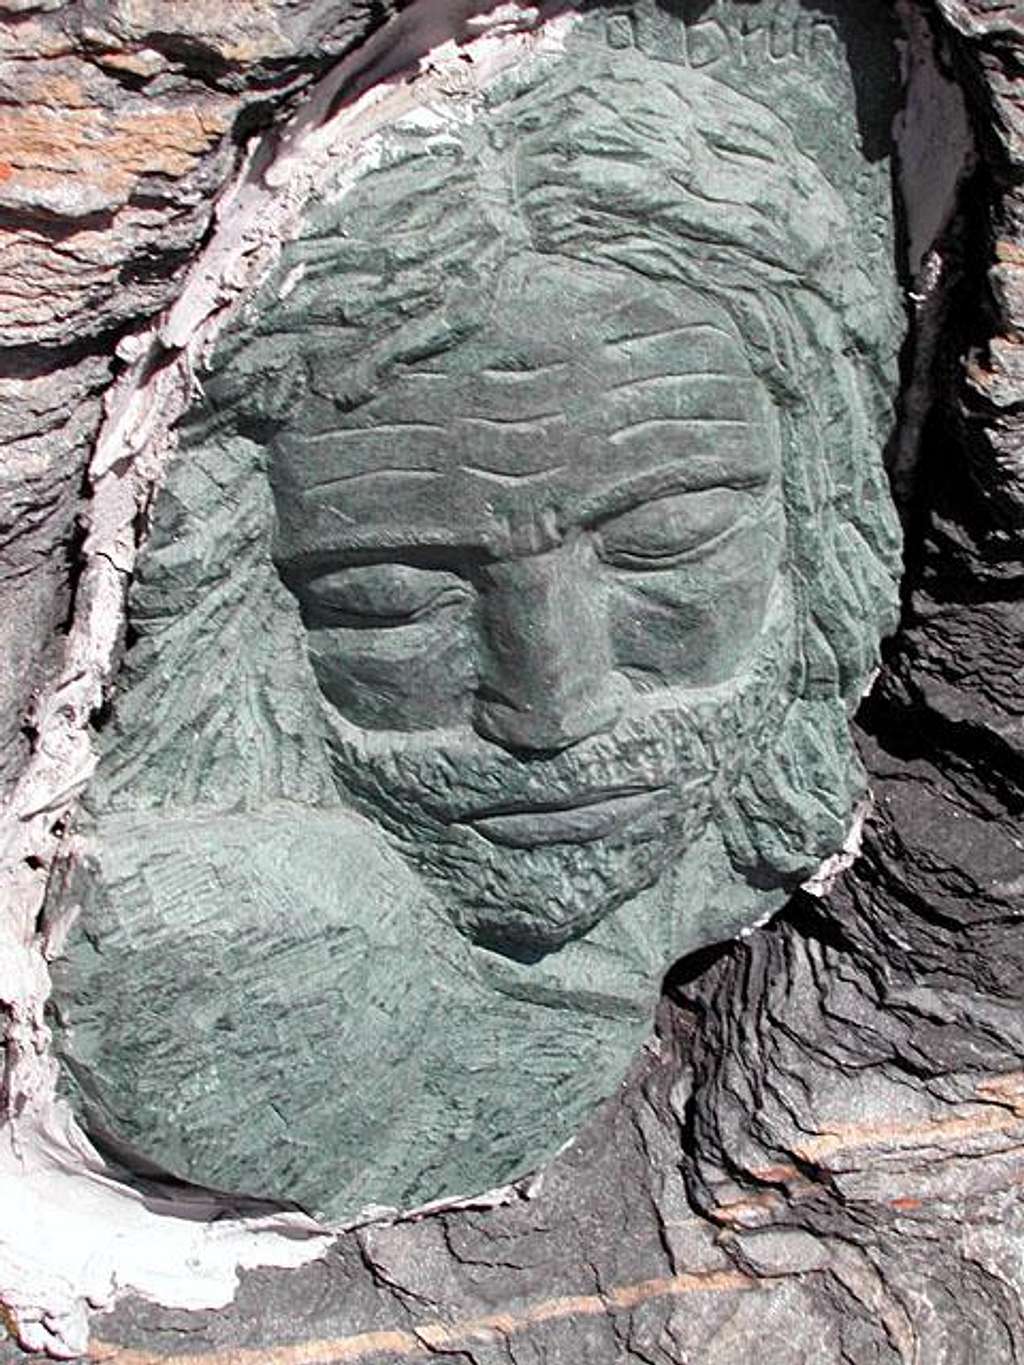 Sculpture nestled in the rocks near the summit of Lancebranlette